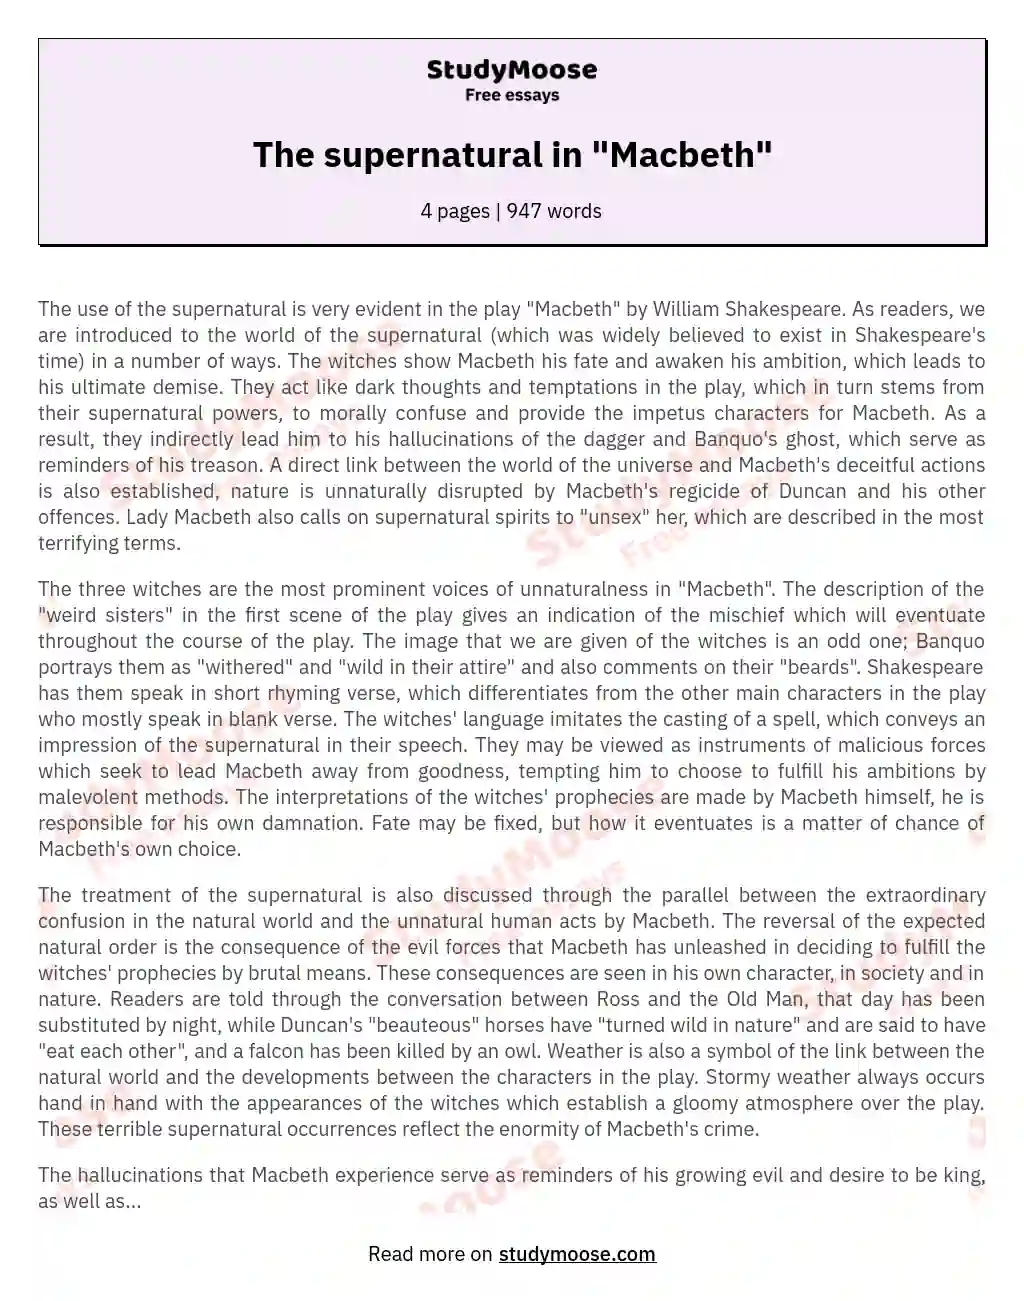 The supernatural in "Macbeth" essay